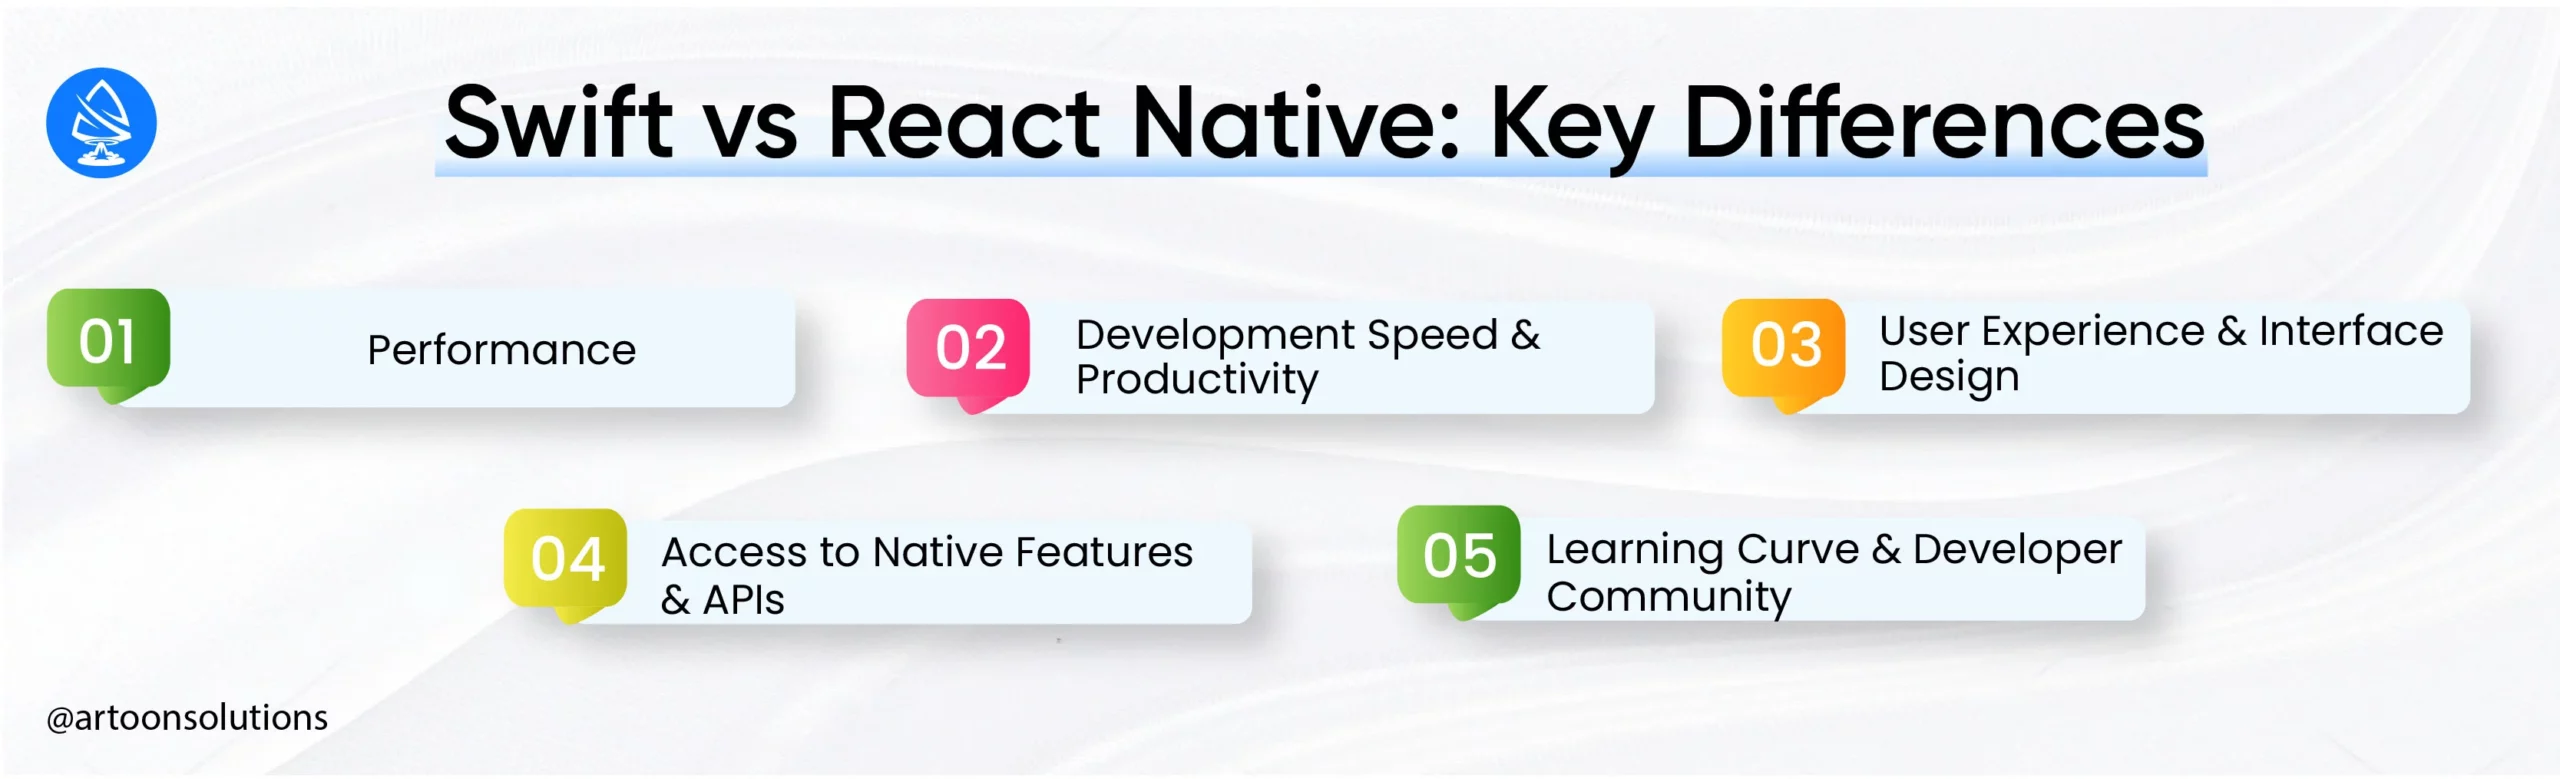 Swift vs React Native: Key Differences